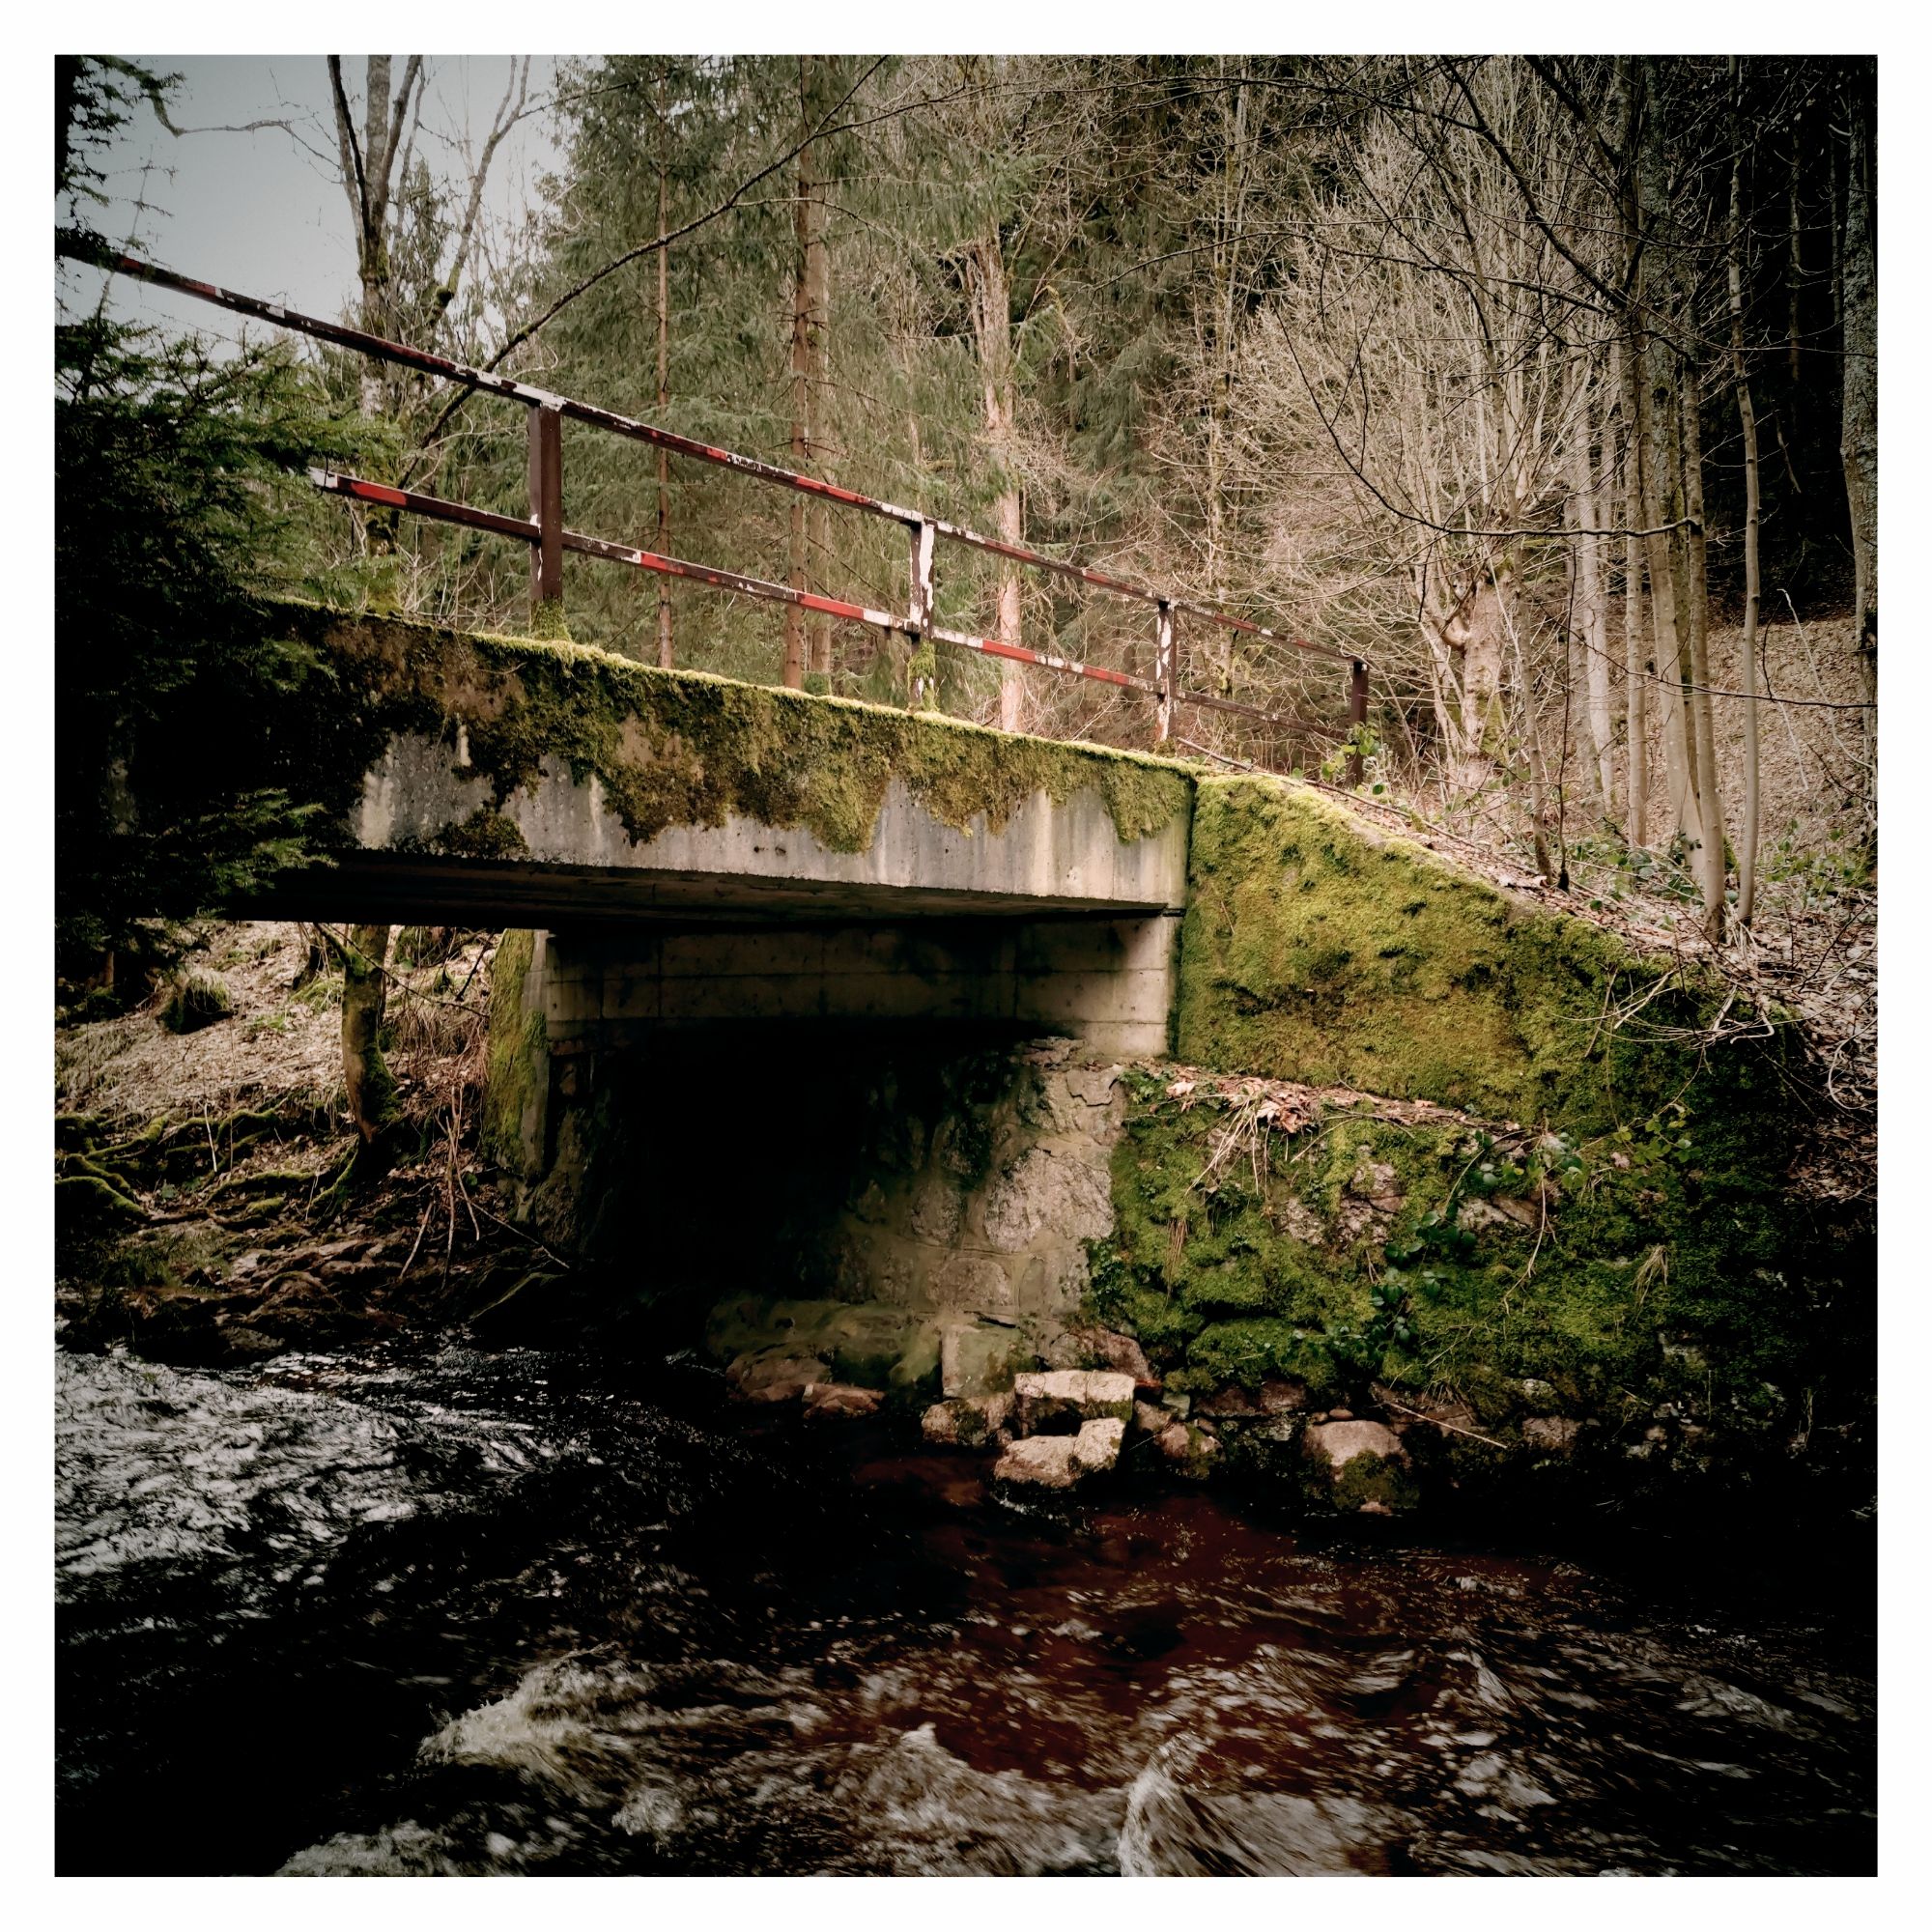 Mossy concrete bridge across a small river.